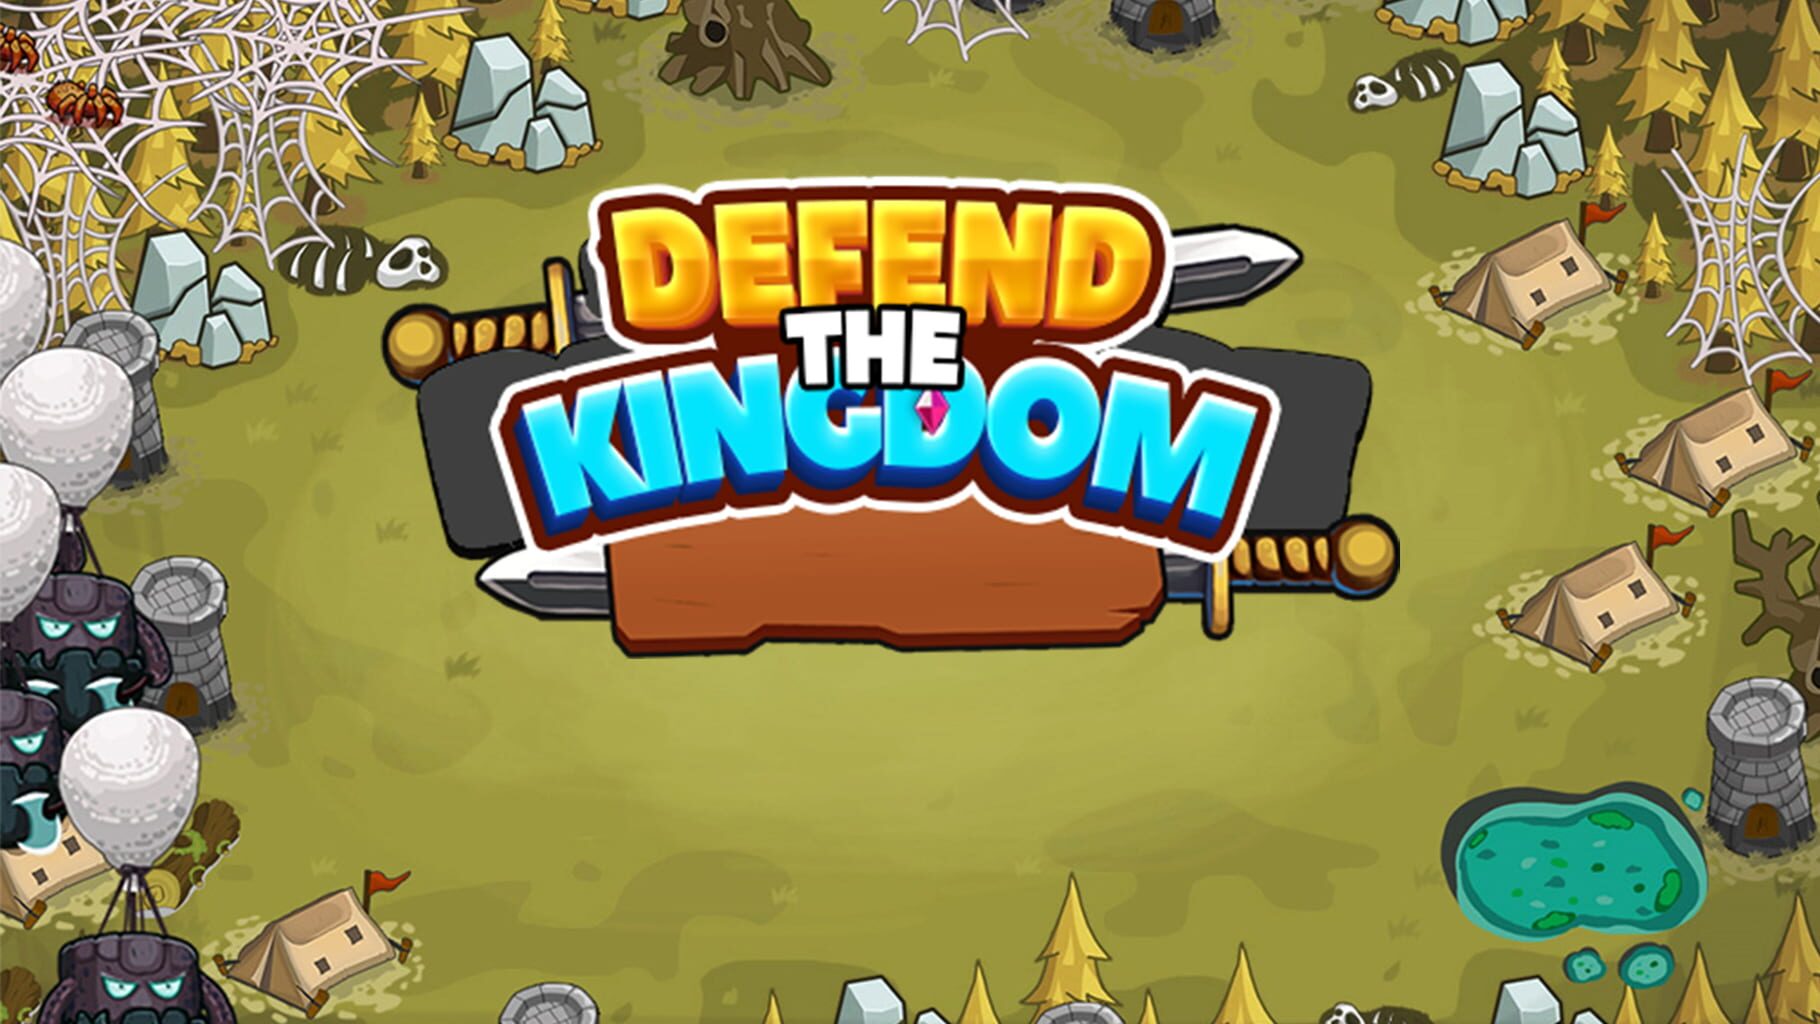 Defend the Kingdom artwork